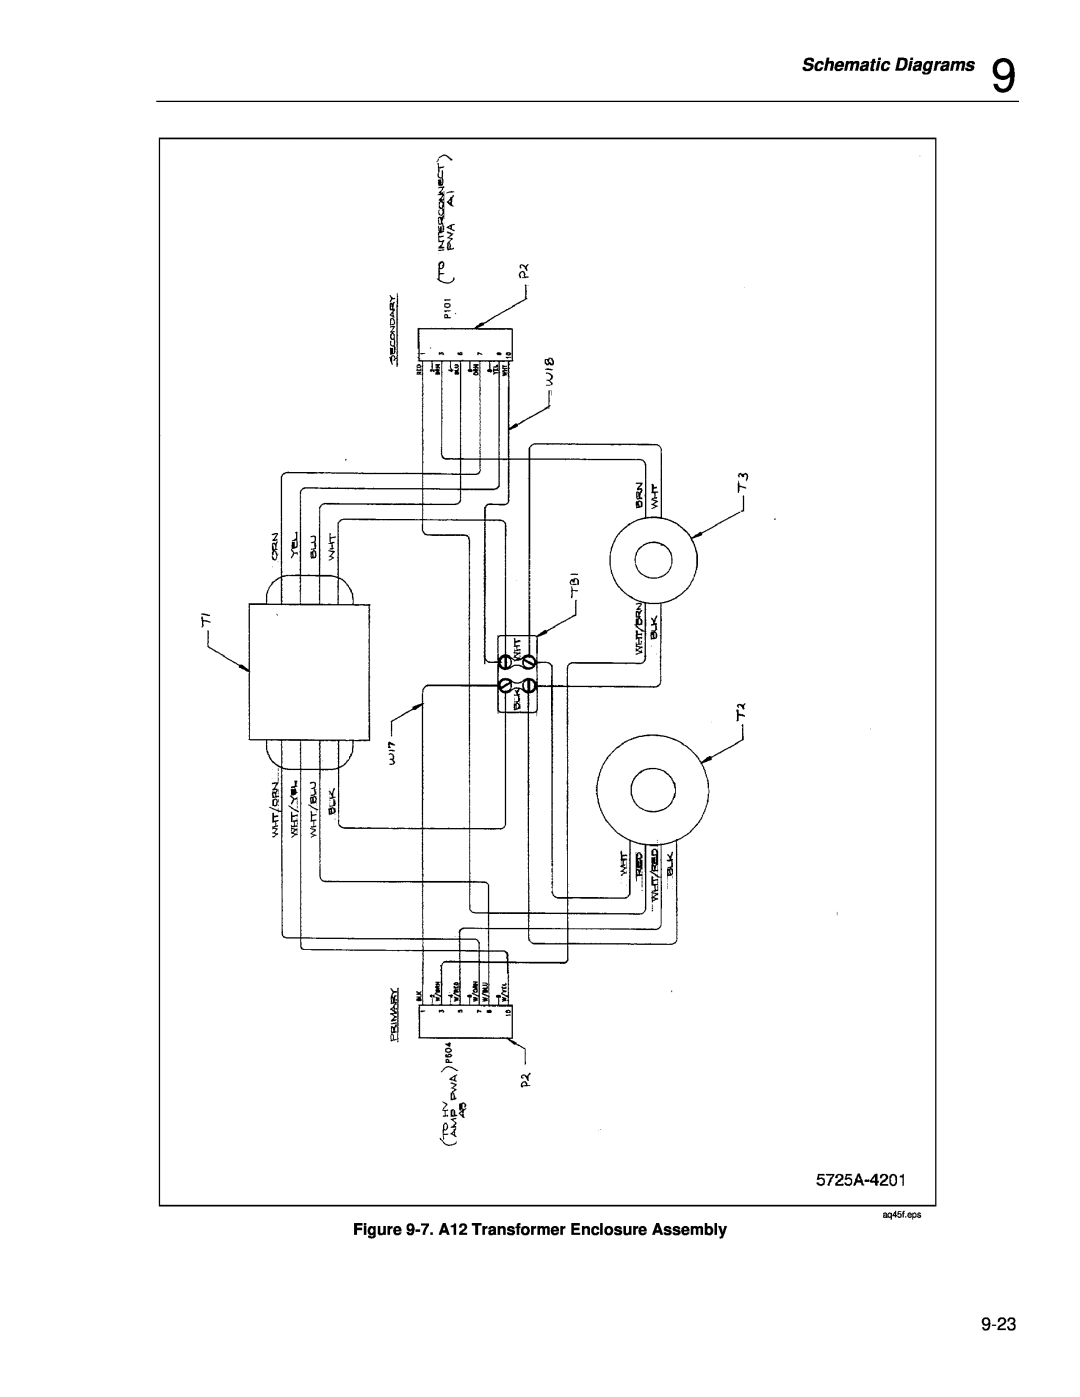 Fluke 5725A instruction manual Schematic Diagrams, 7.A12 Transformer Enclosure Assembly, aq45f.eps 